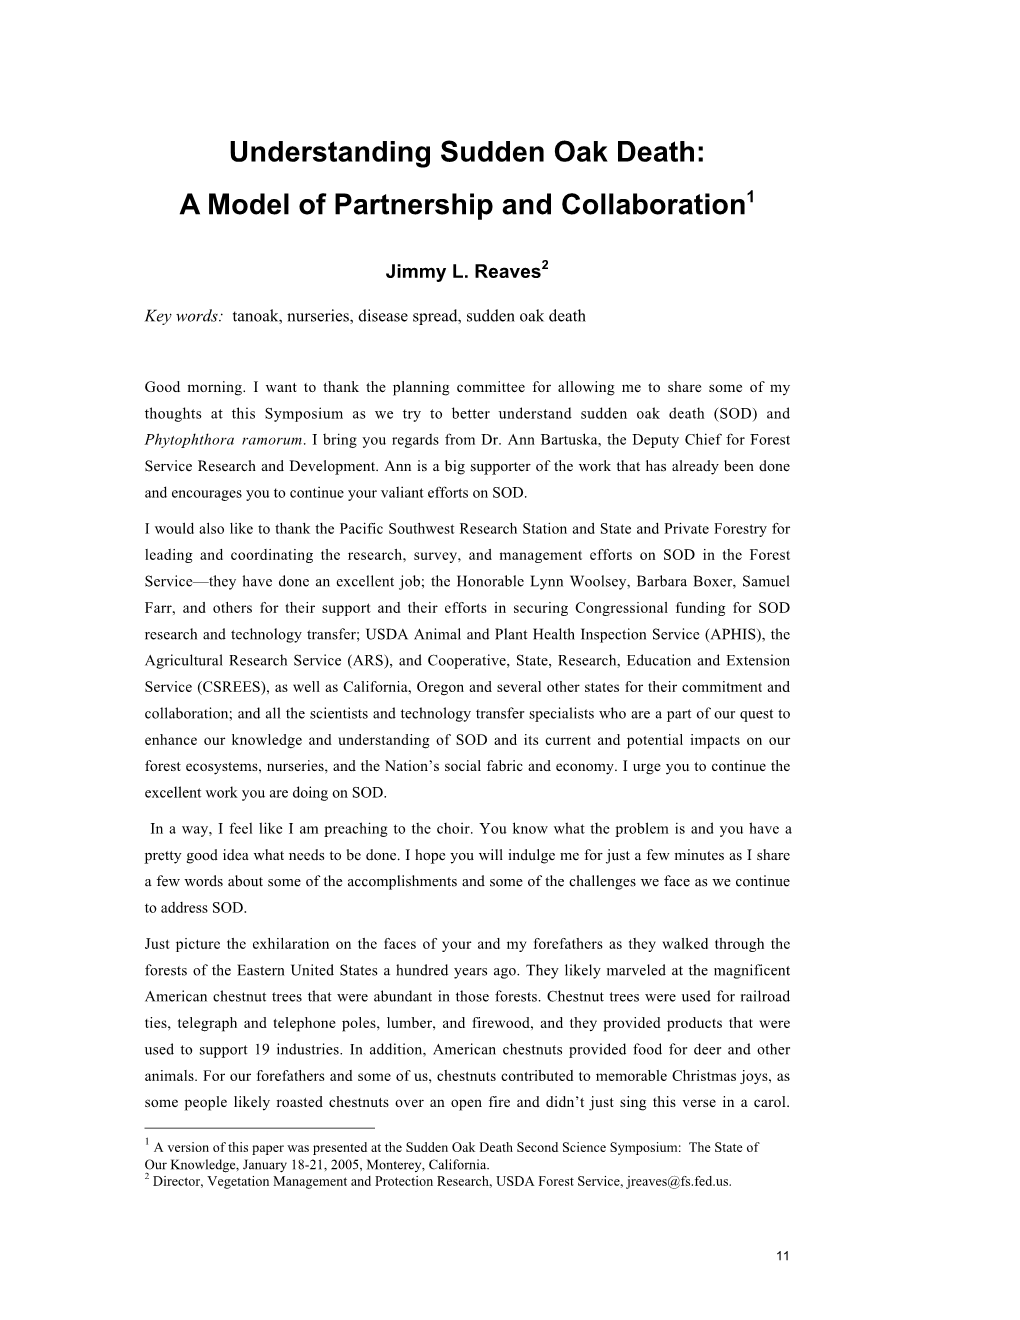 Understanding Sudden Oak Death: a Model of Partnership and Collaboration1